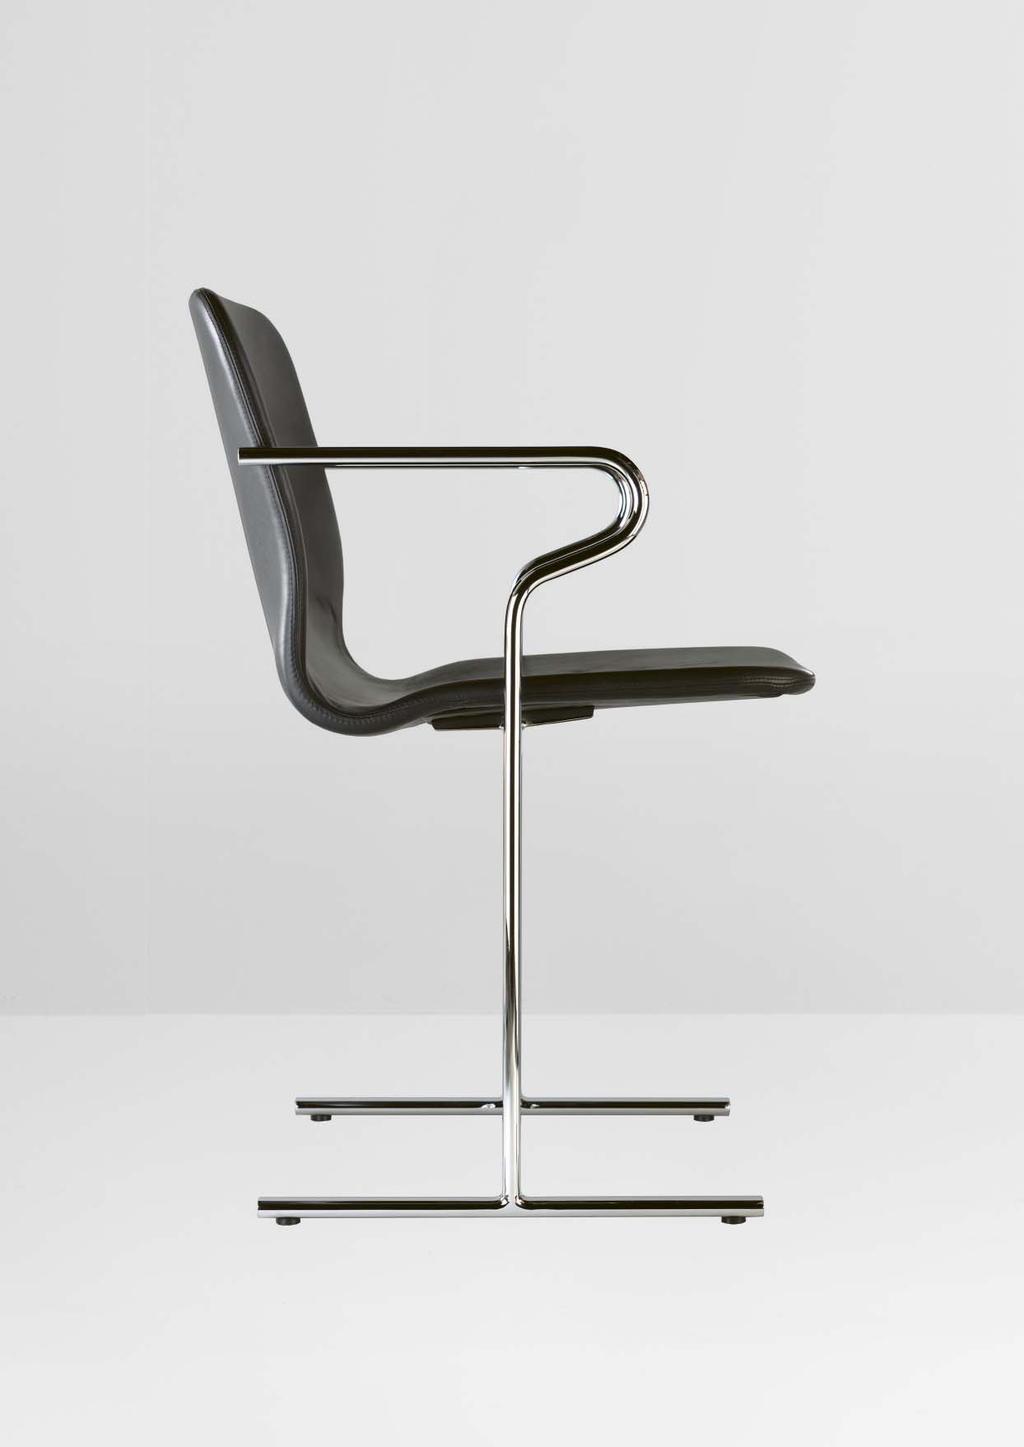 NURMESNIEMI DESIGN ANTTI NURMESNIEMI Professor Antti Nurmesniemi designed the Triennale chair for the Milan Trienniale in 1960.